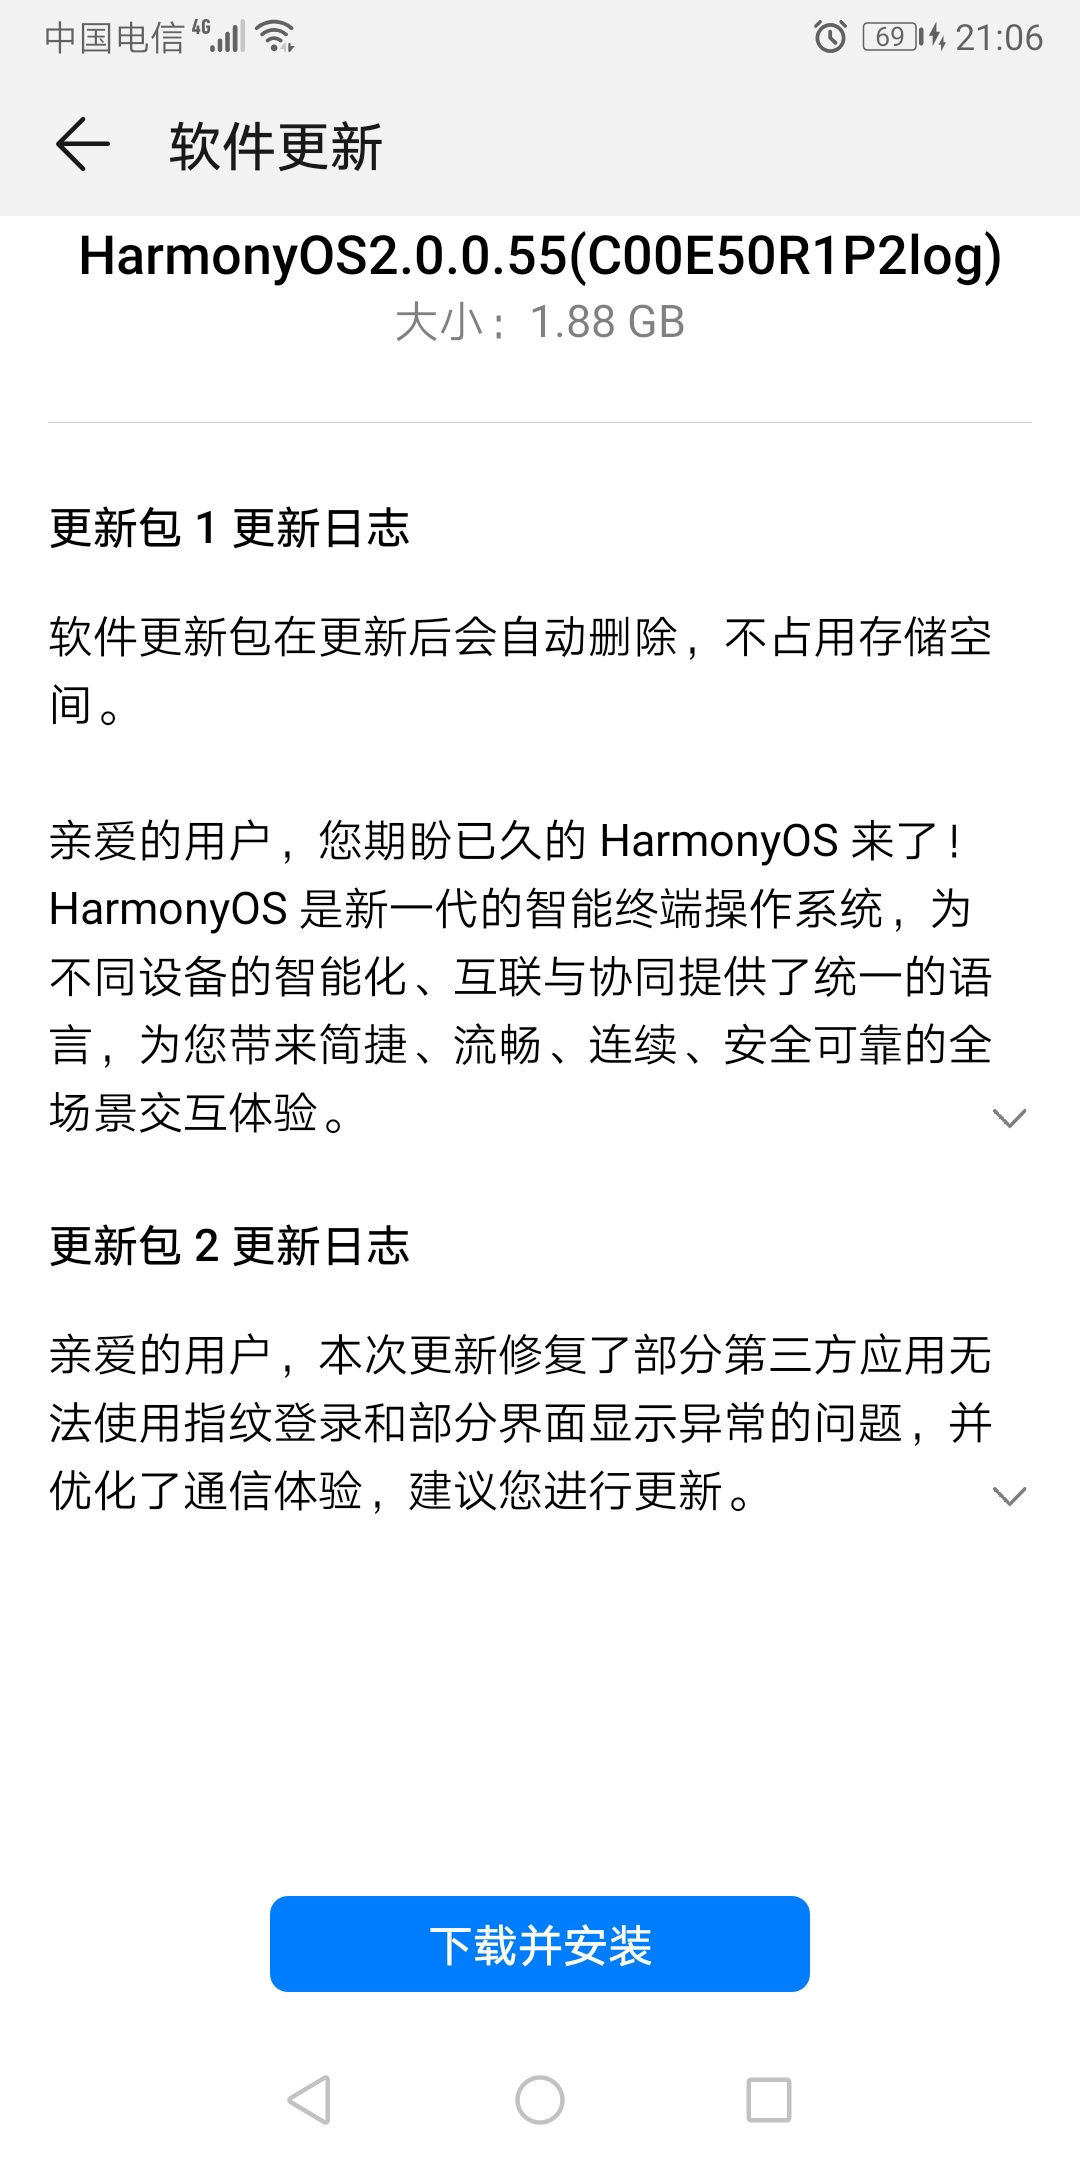 h华为 nova 2s 推送鸿蒙 HarmonyOS 2.0 内测更新，入选名单公布